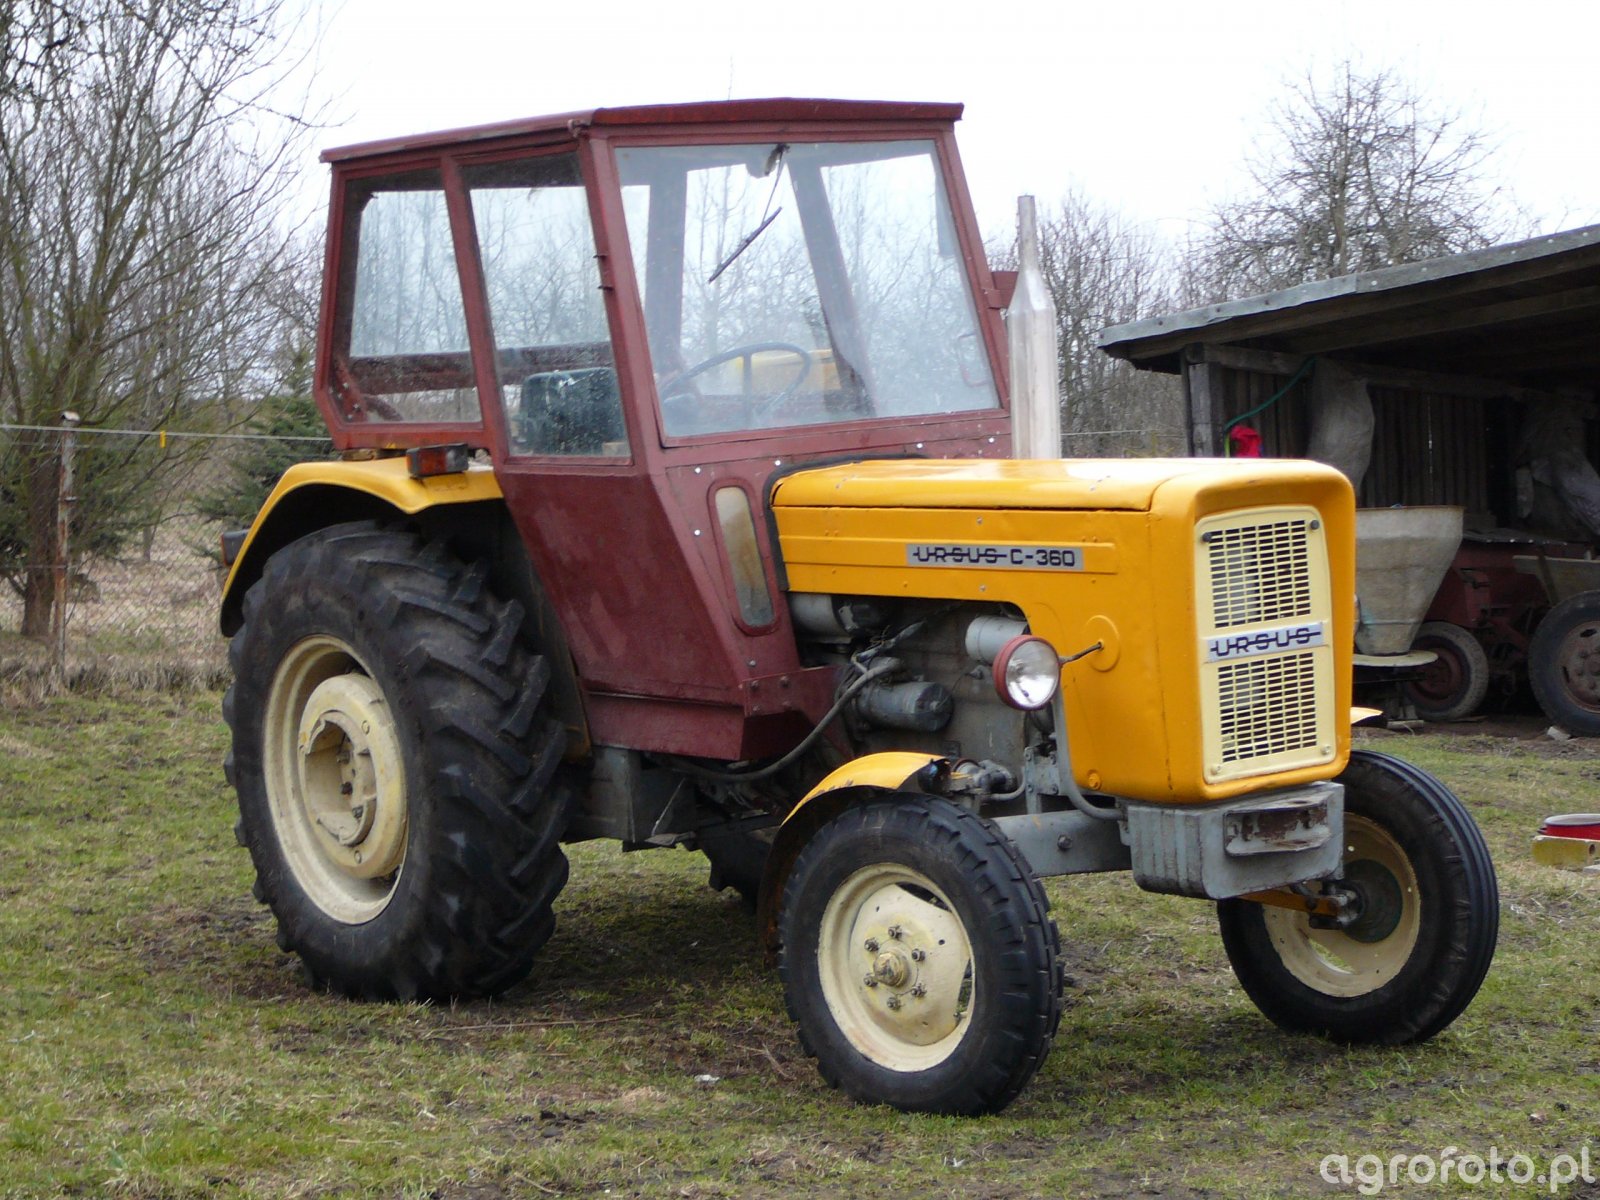 zdj-cie-traktor-ursus-c-360-535020-galeria-rolnicza-agrofoto